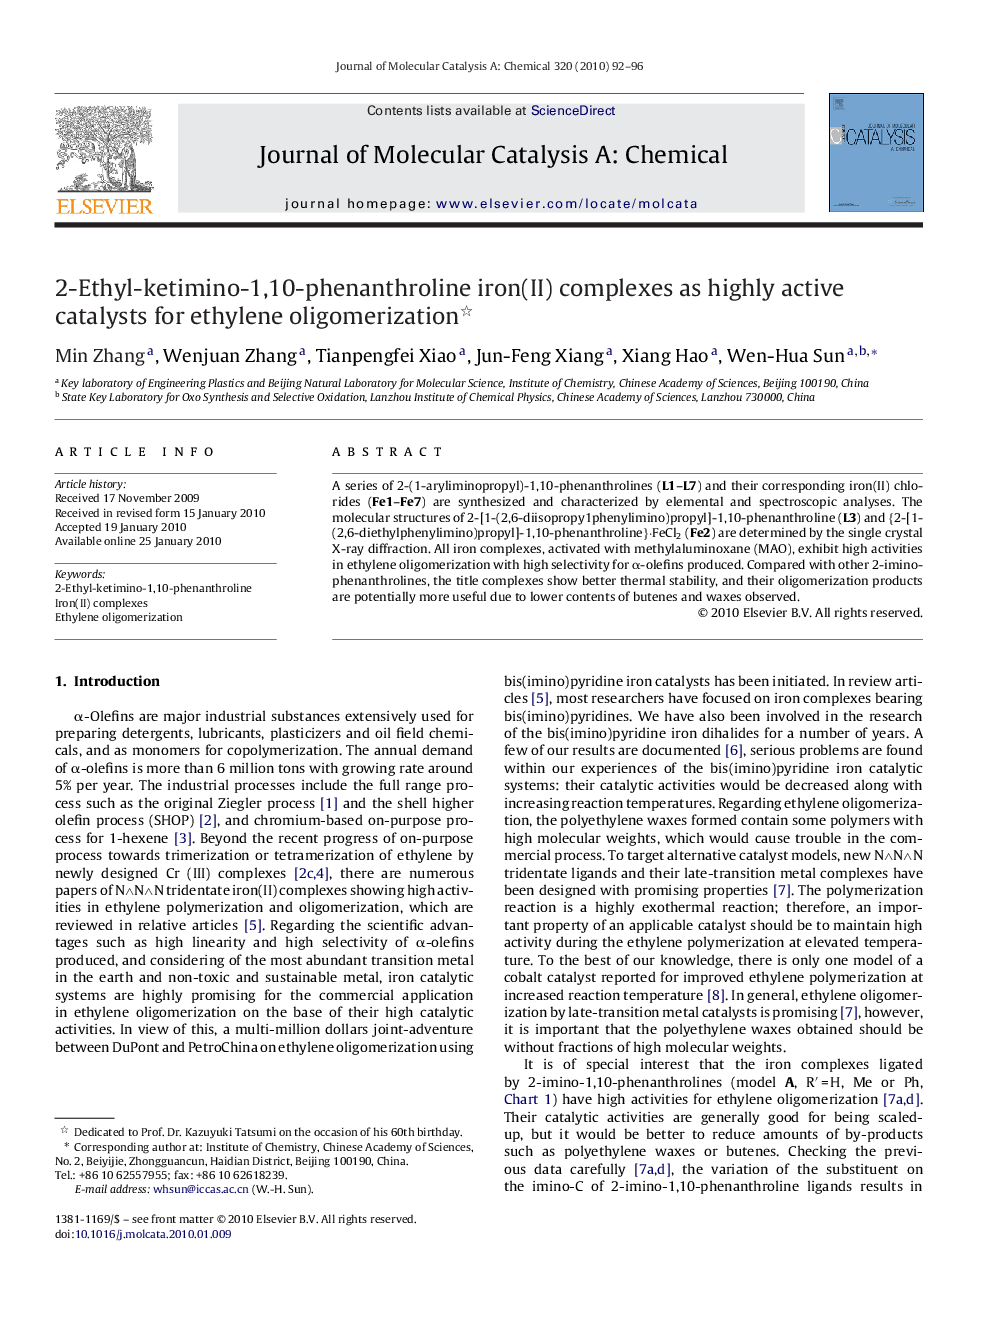 2-Ethyl-ketimino-1,10-phenanthroline iron(II) complexes as highly active catalysts for ethylene oligomerization 